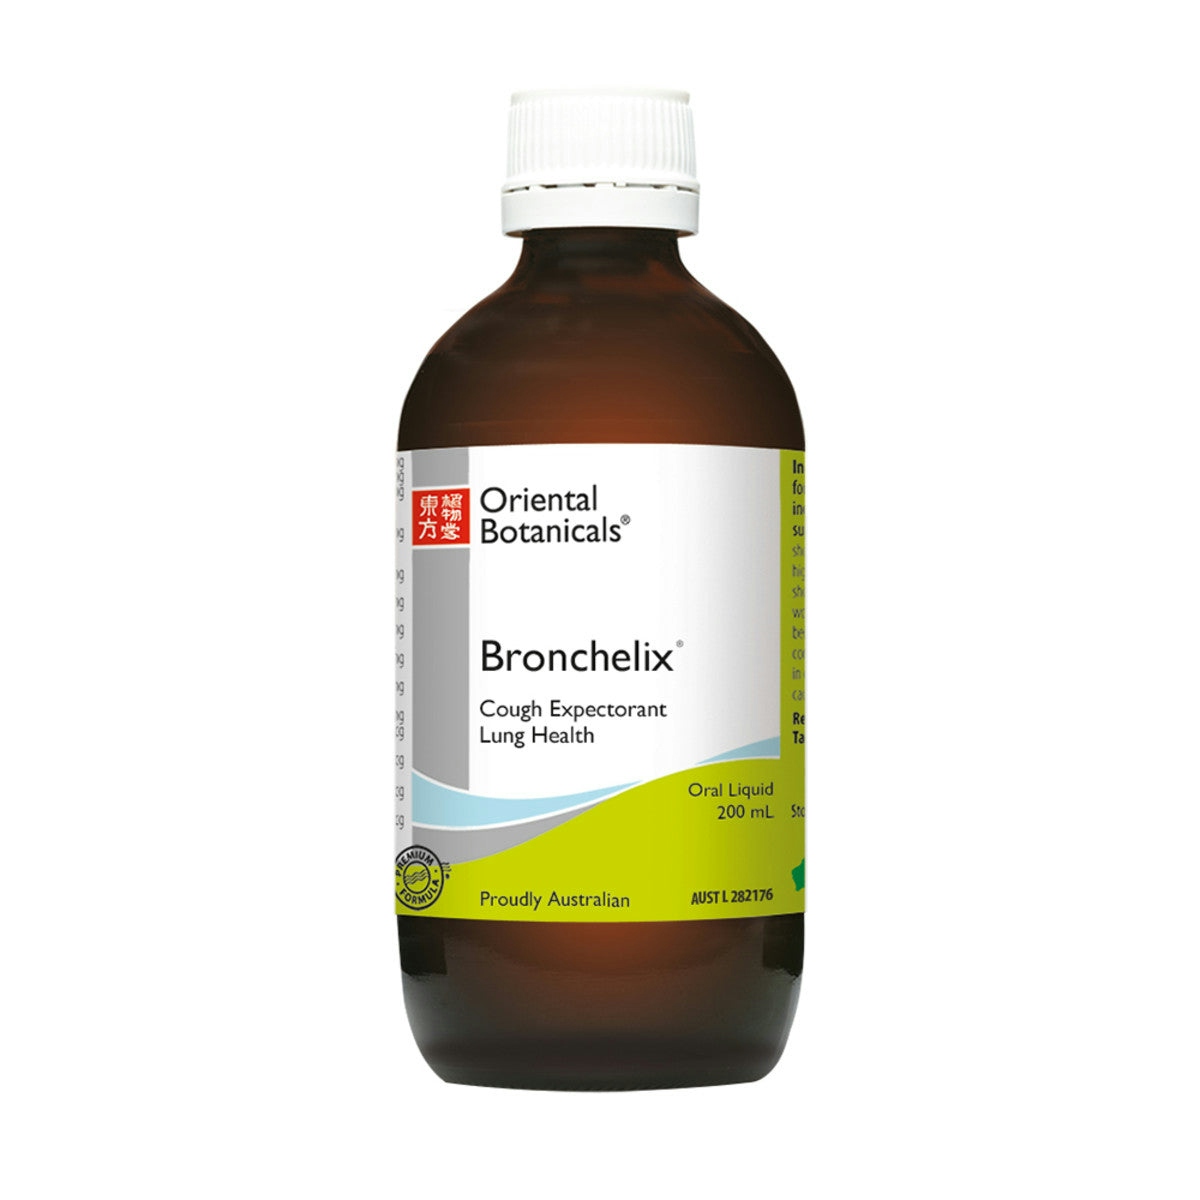 image of Oriental Botanicals Bronchelix Oral Liquid 200ml on white background 